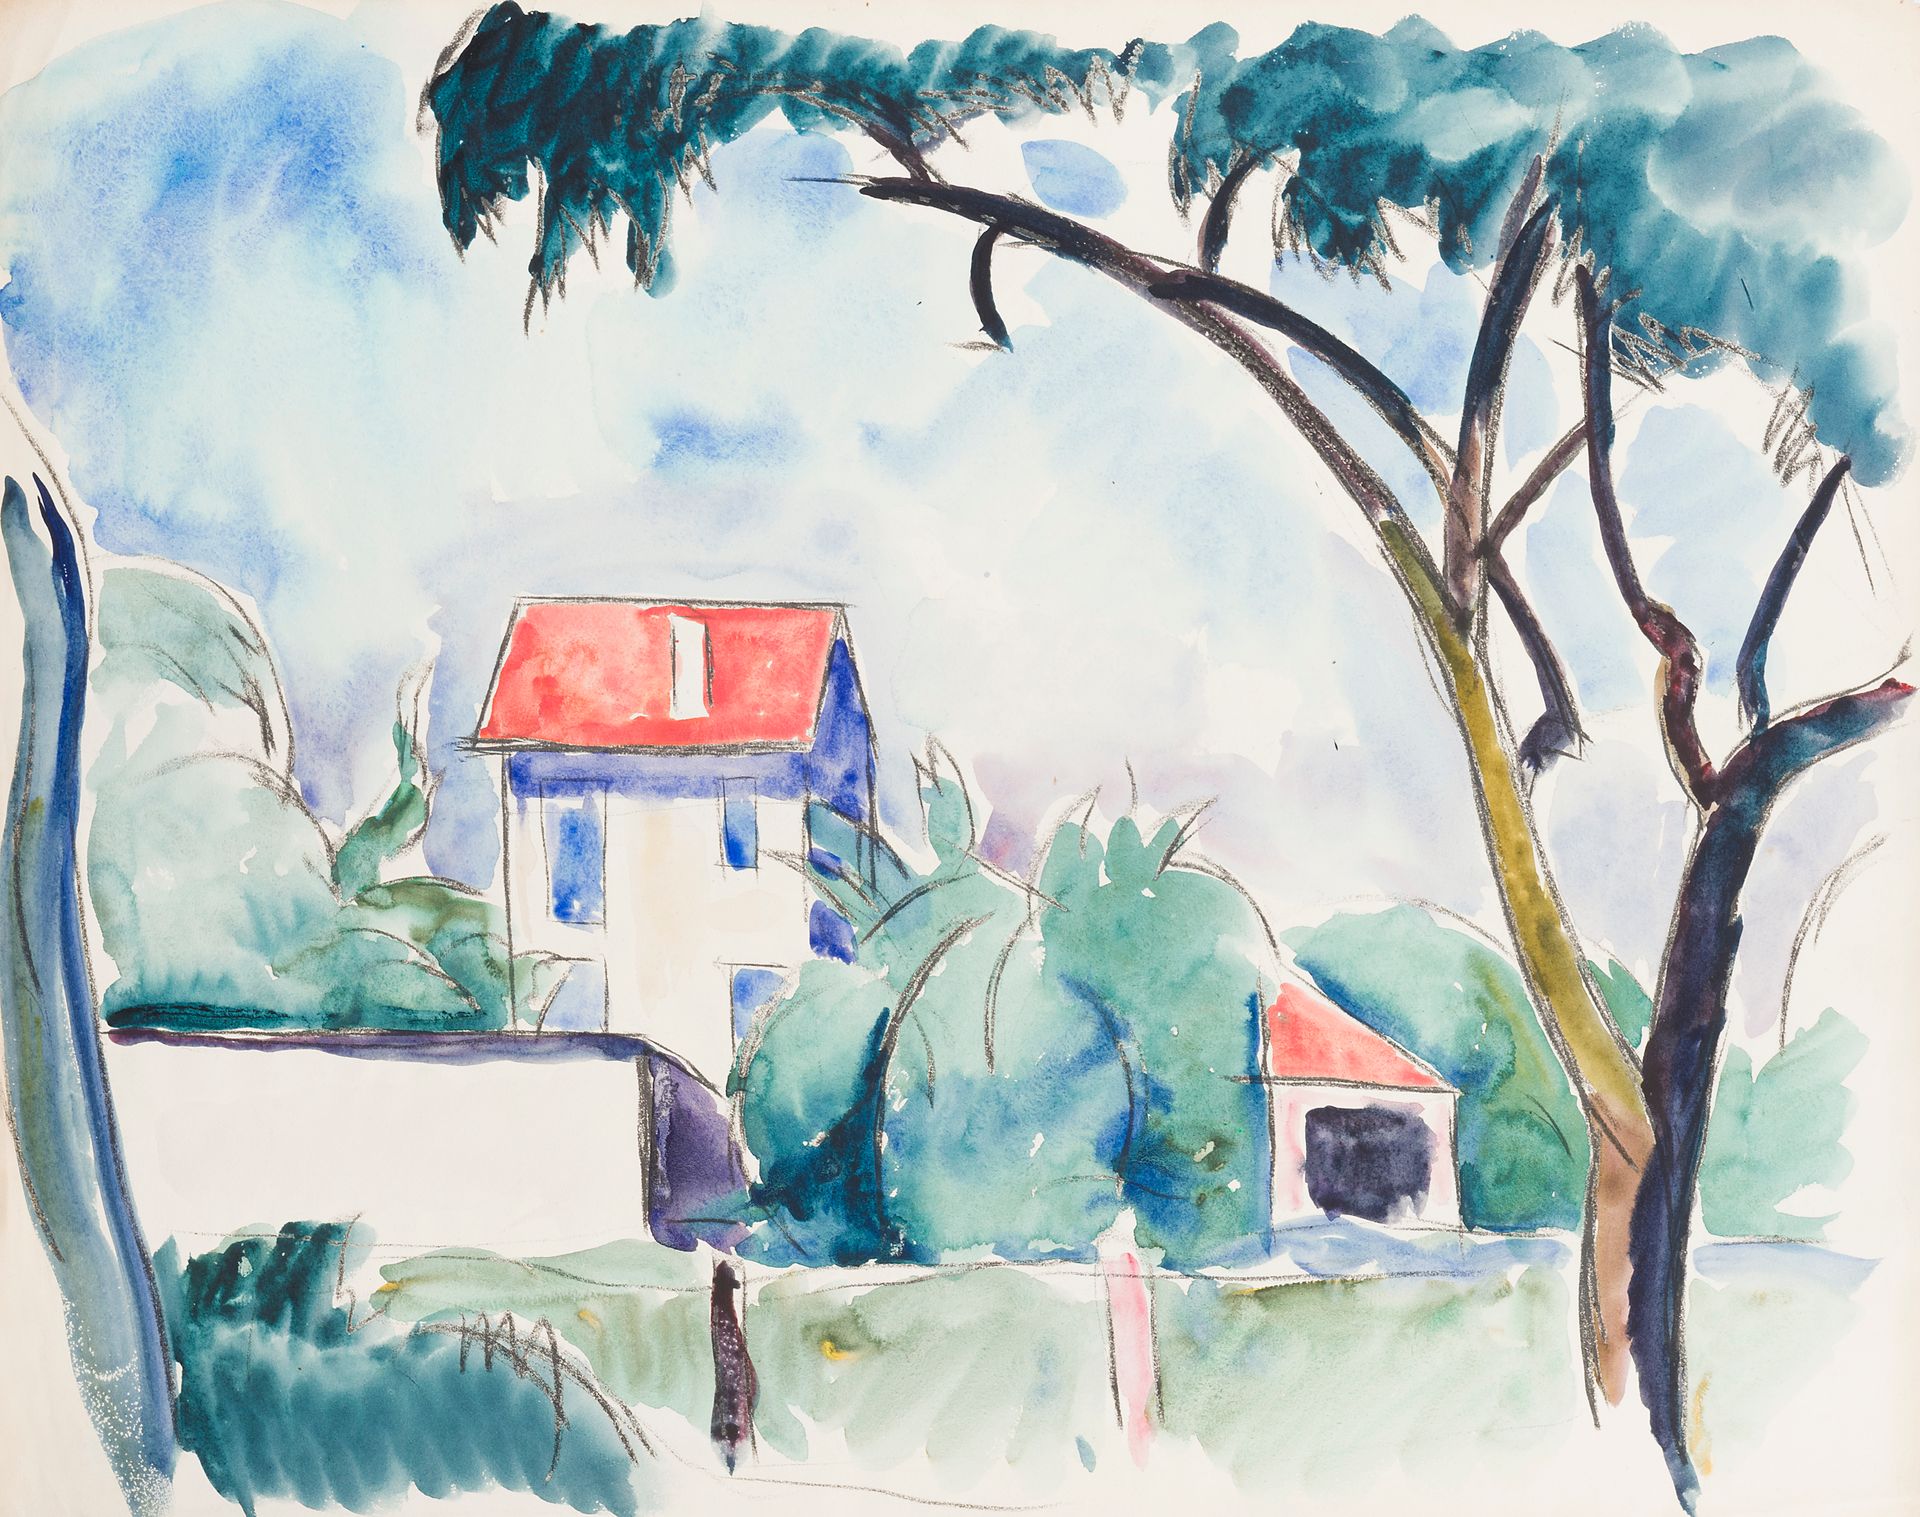 Null 查尔斯-皮卡特-勒杜(1881-1959)
树木和房屋，1910年
纸上水彩画
45 x 56 cm